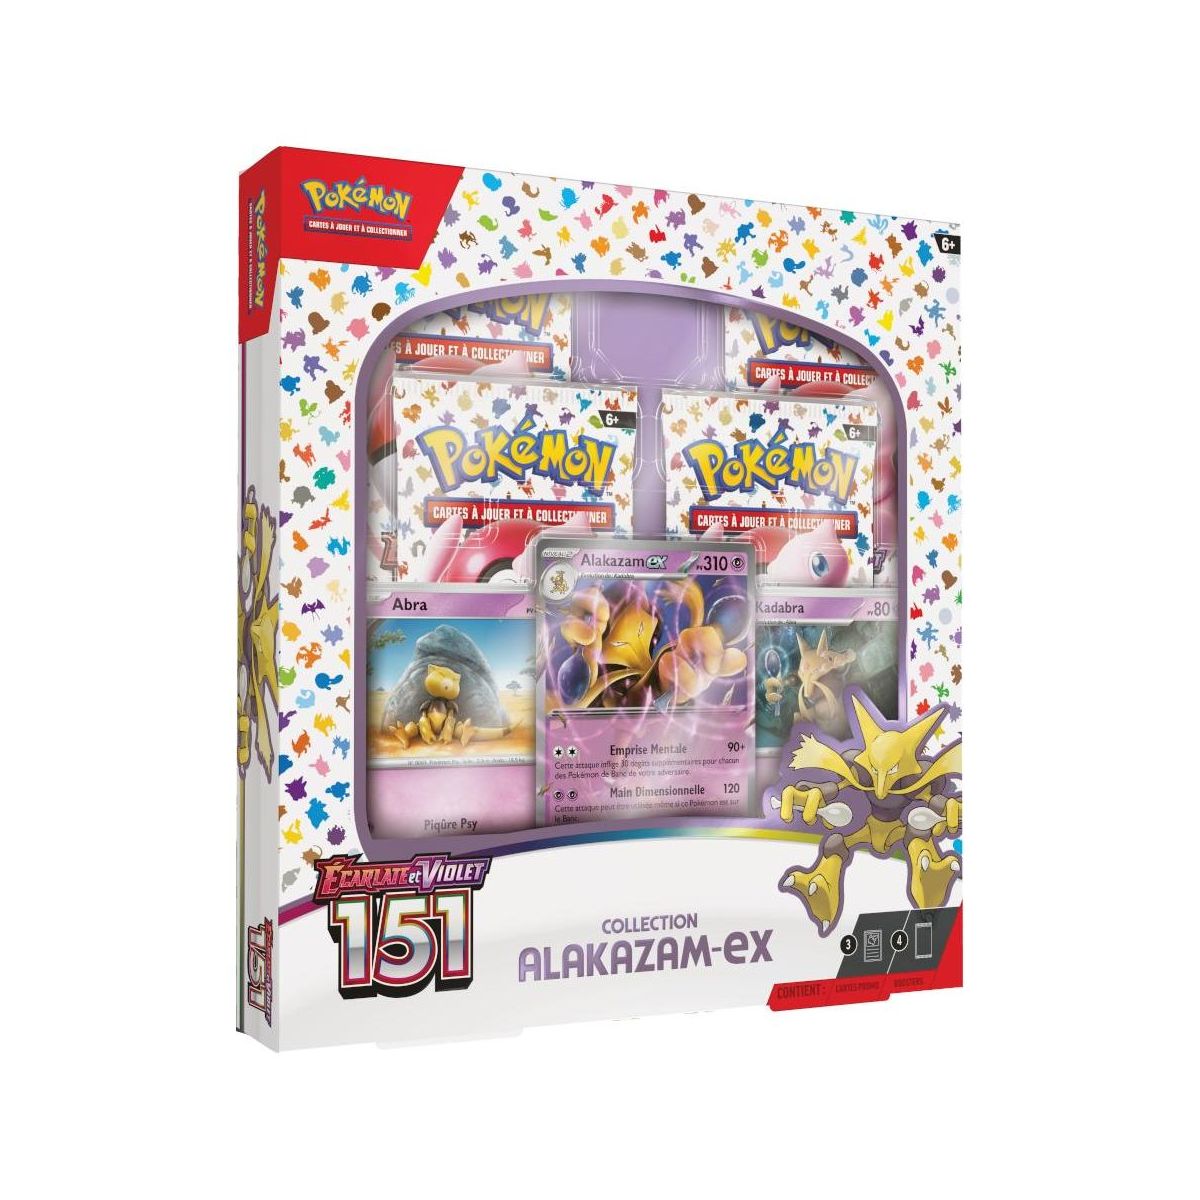 Item Pokémon - Coffret Collection Alakazam EX - Ecarlate et Violet - 151 -[SV03.5 - EV03.5] - FR